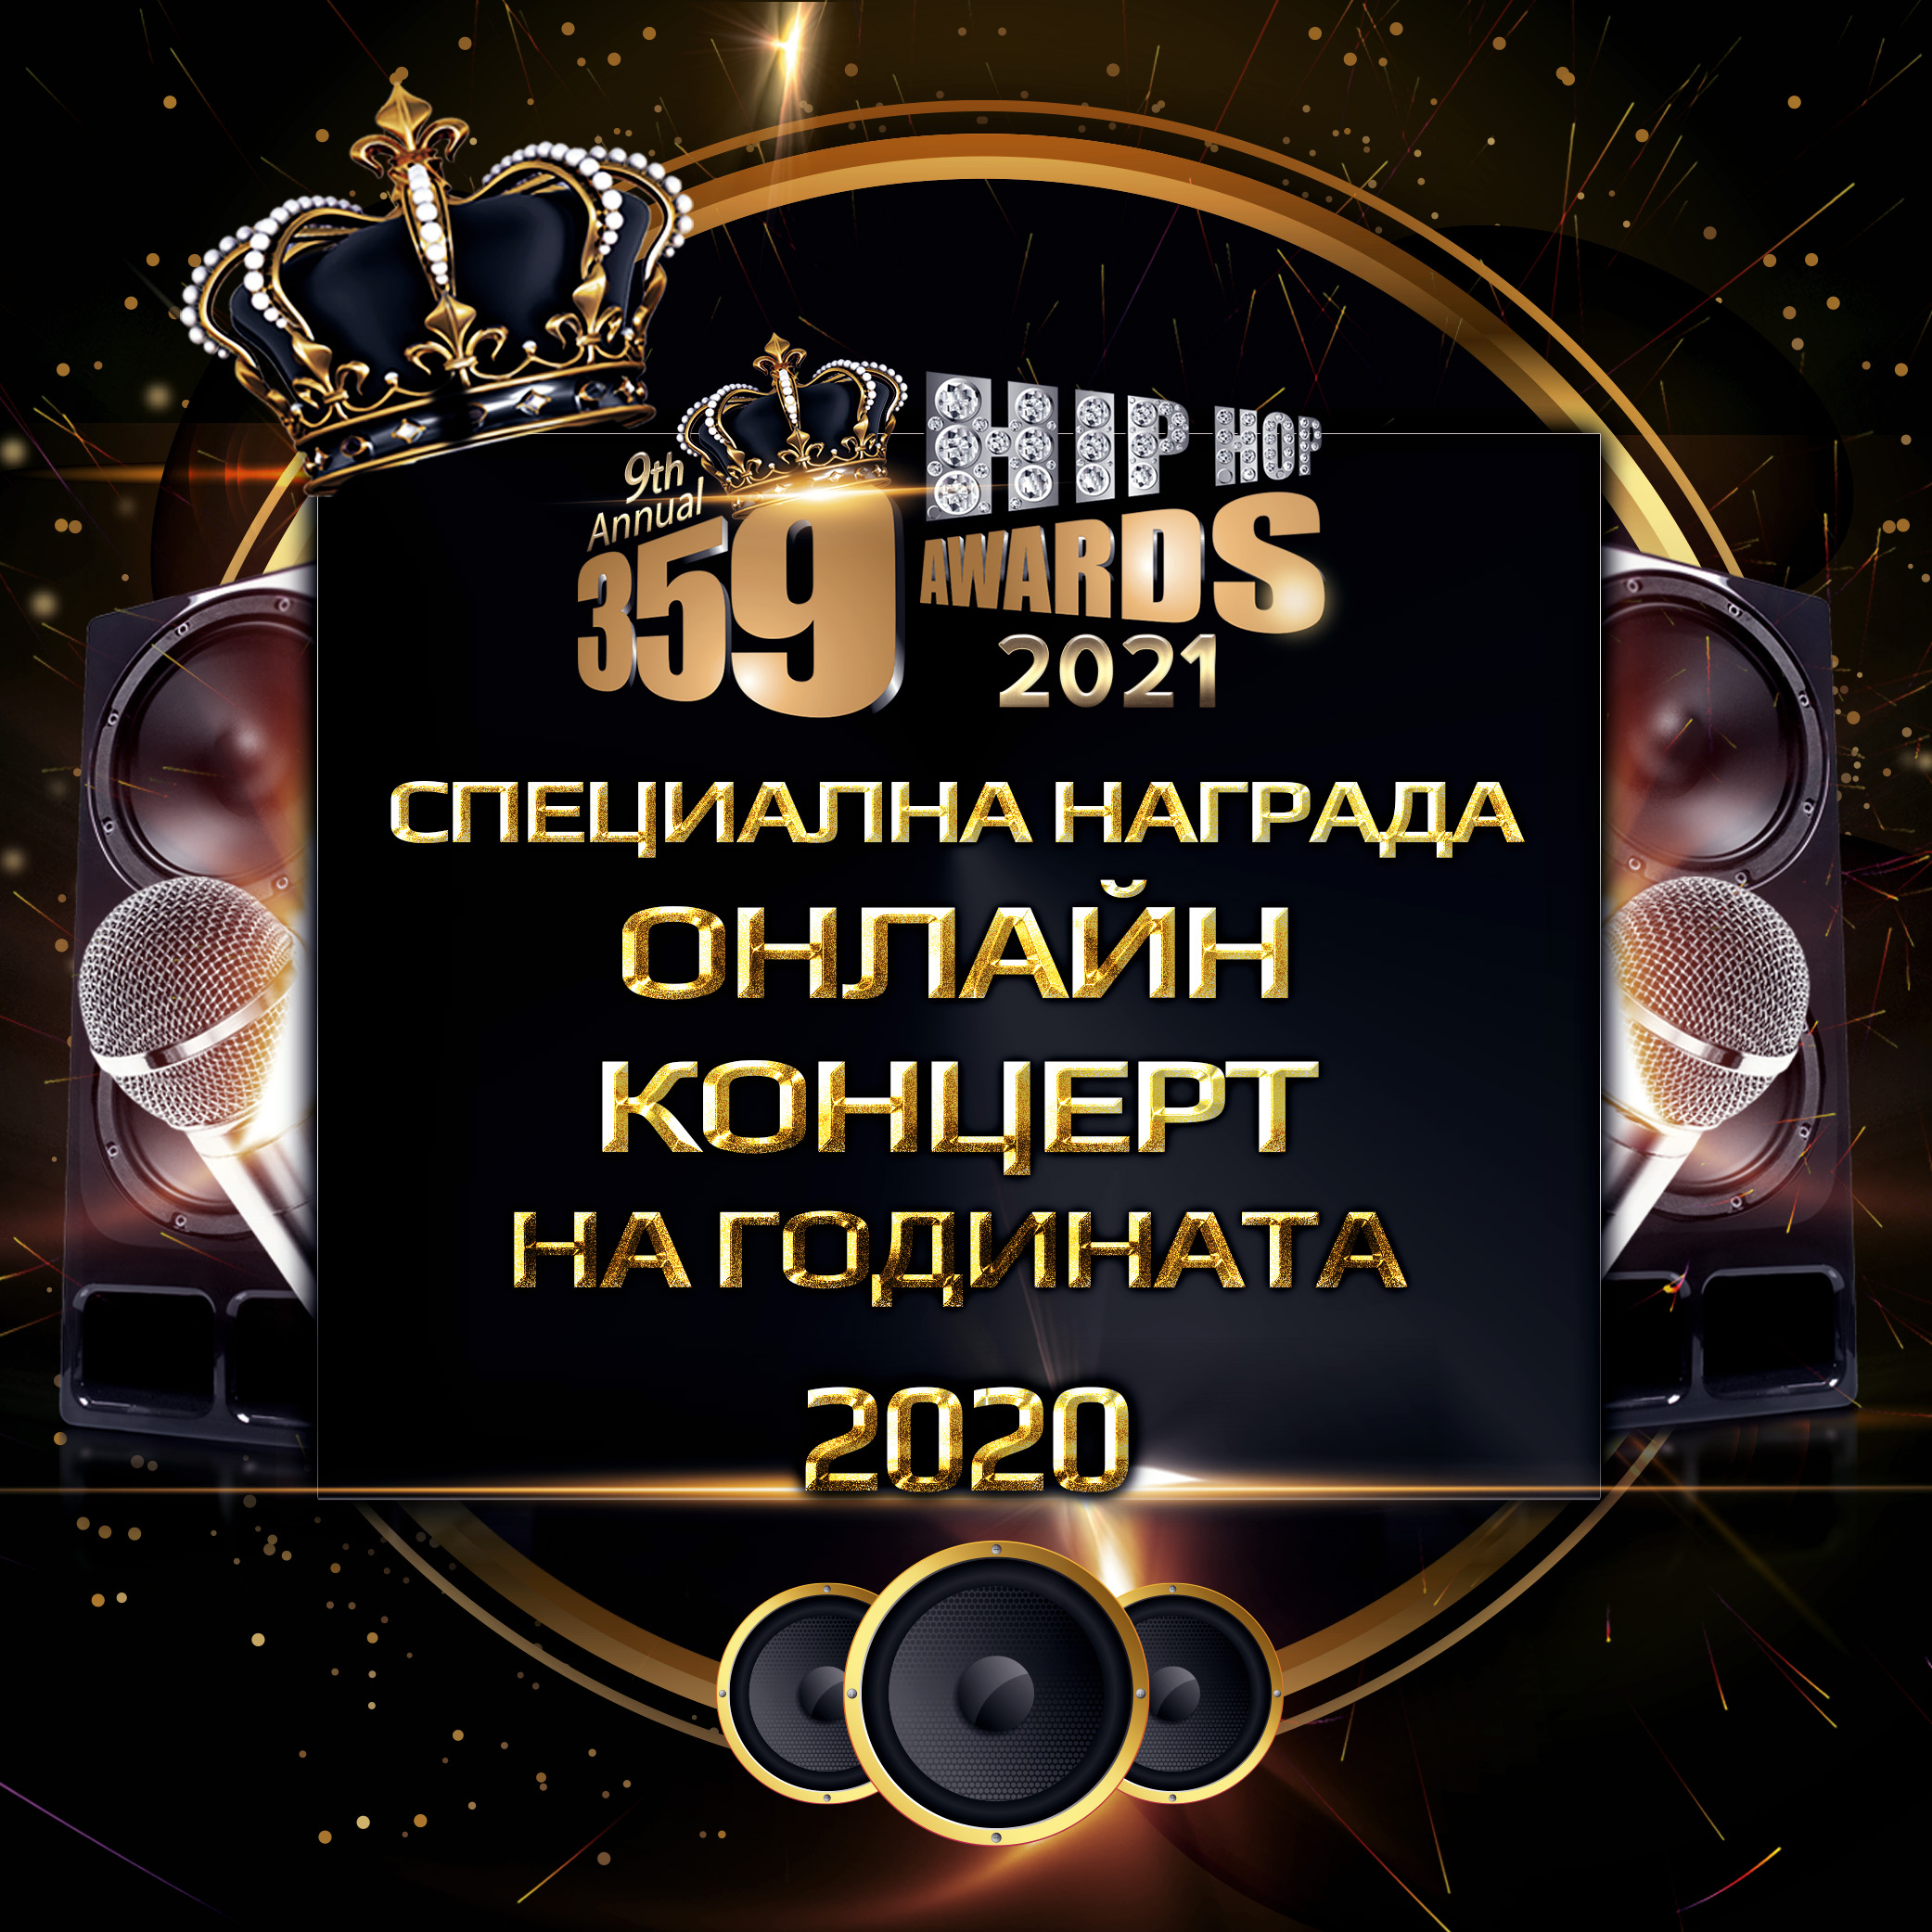 nominacii  359 awards 2021 on lajn koncert - Номинации